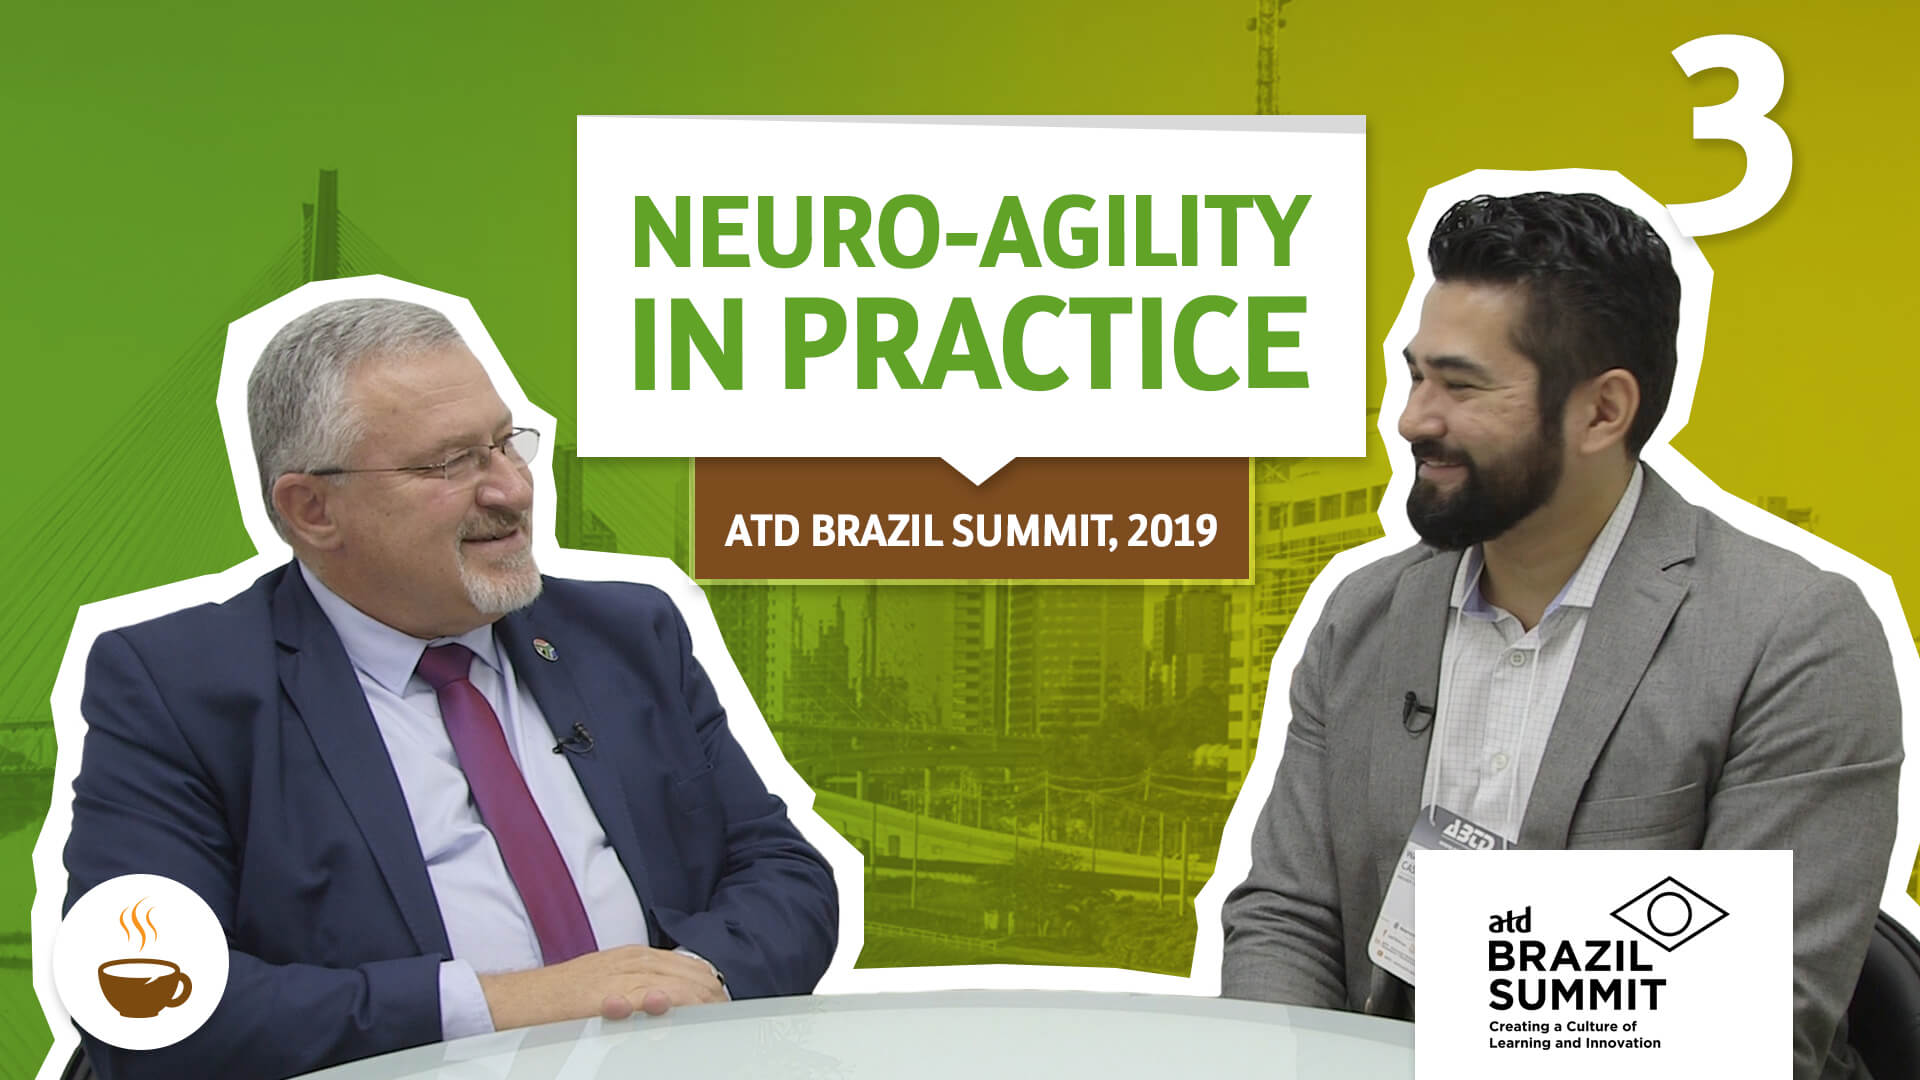 Wagner Cassimiro fala com Andre sobre Neuro-agility in practice – ATD Brazil Summit 2019